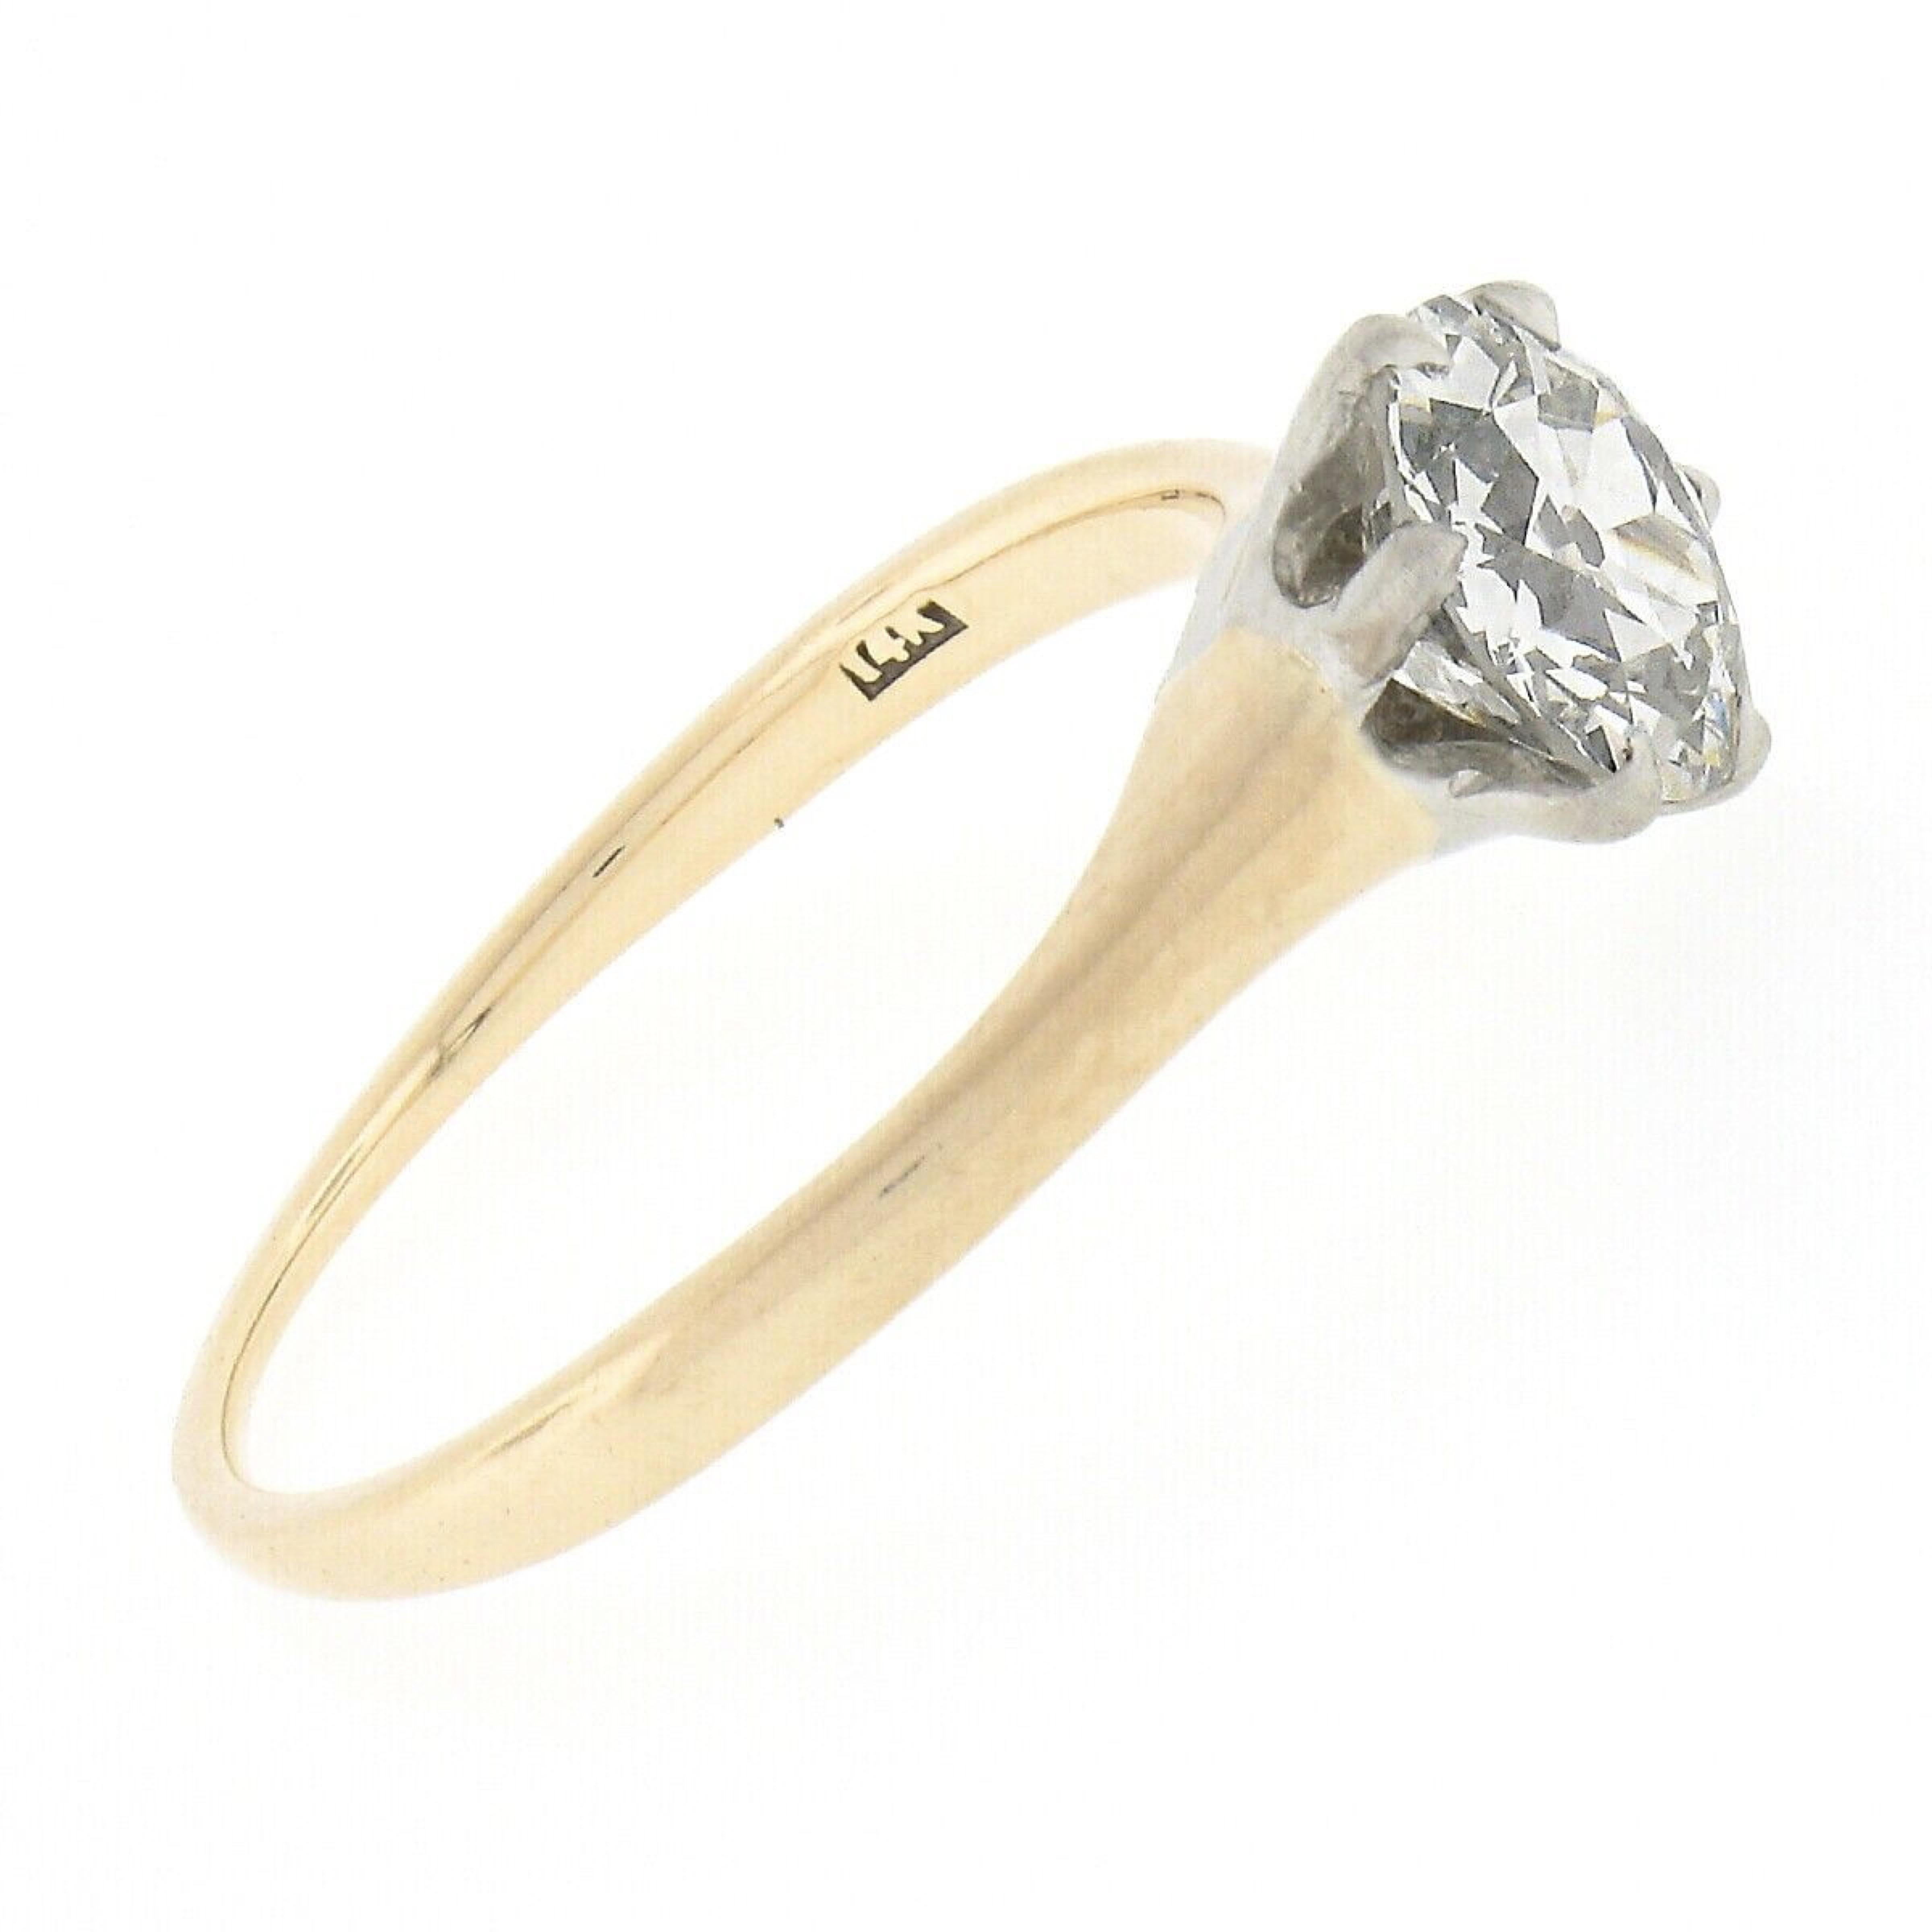 Antique Edwardian 14k Gold & Plat GIA European Diamond Solitaire Engagement Ring For Sale 2